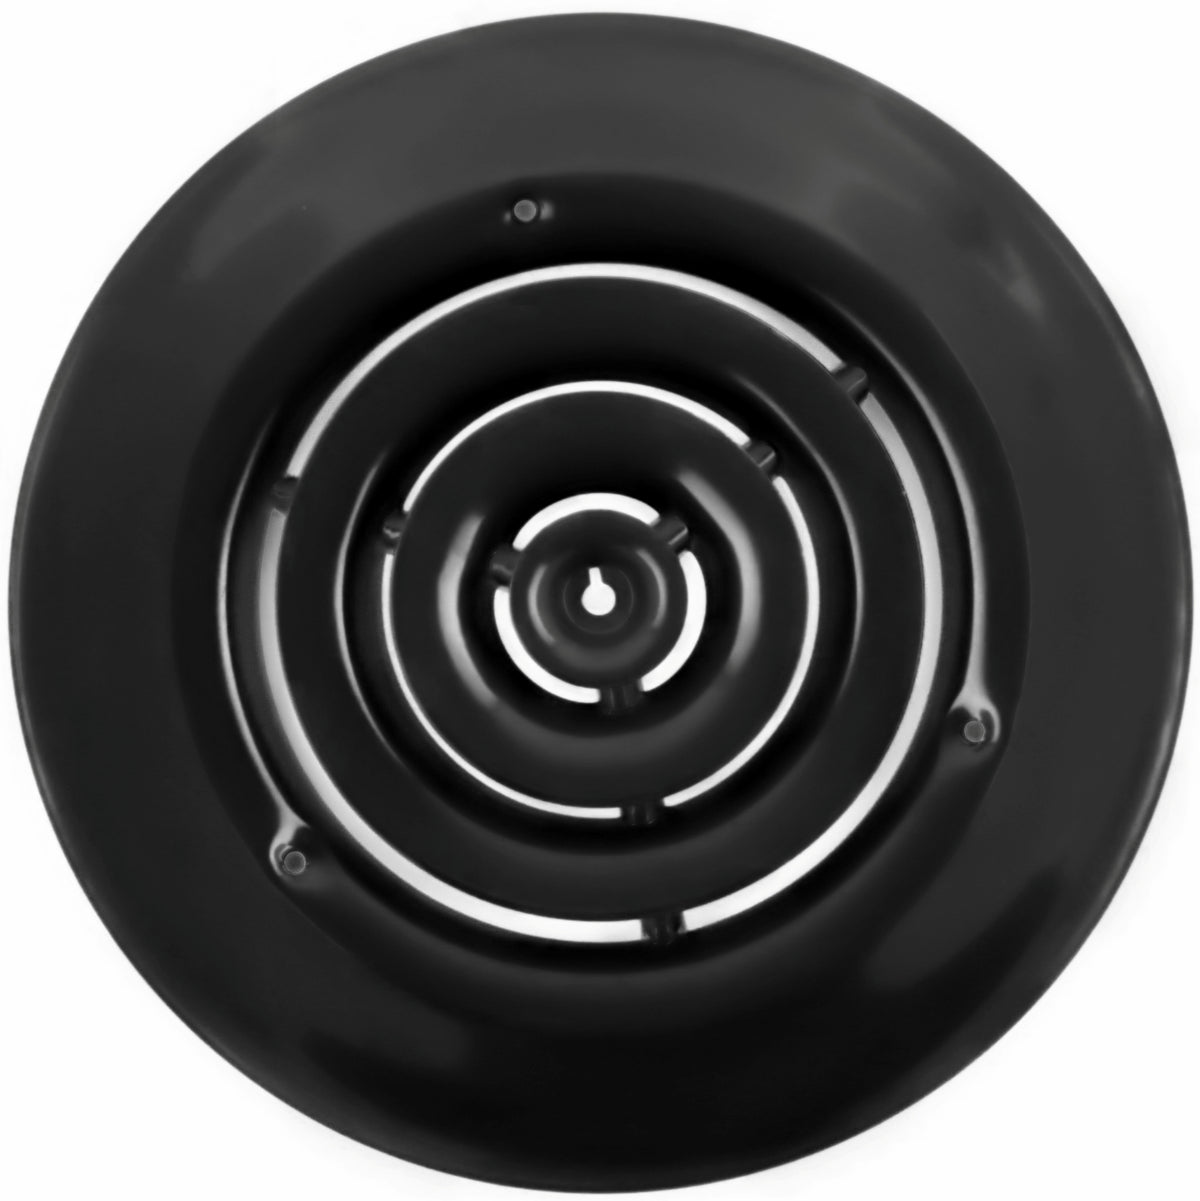 6&quot; Round Ceiling Diffuser - Easy Air Flow - HVAC Duct [Black]